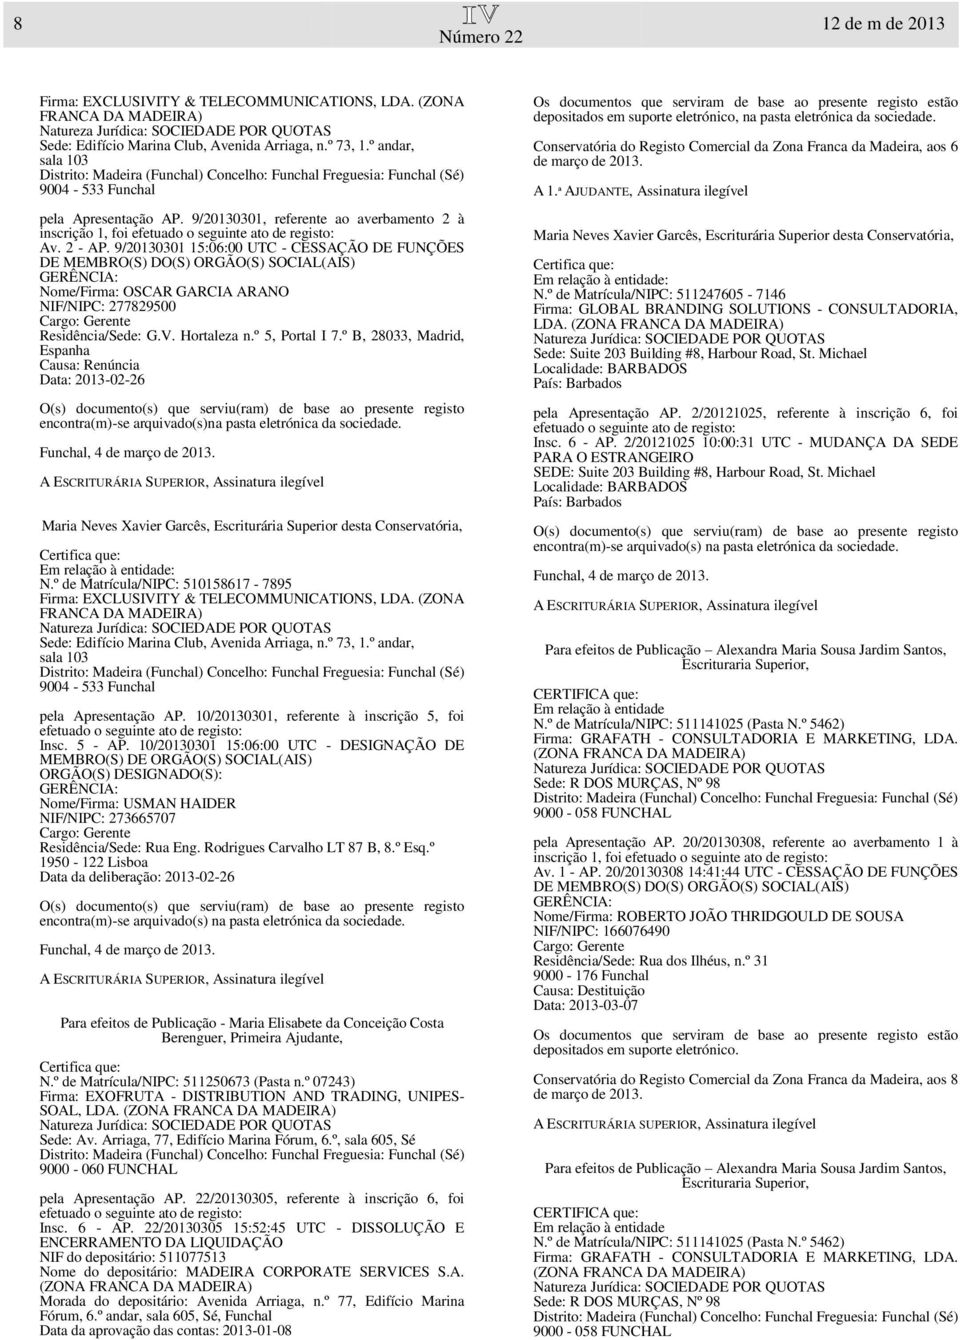 Hortaleza n.º 5, Portal I 7.º B, 28033, Madrid, Espanha Causa: Renúncia Data: 2013-02-26 encontra(m)-se arquivado(s)na pasta eletrónica da sociedade. Funchal, 4 : N.